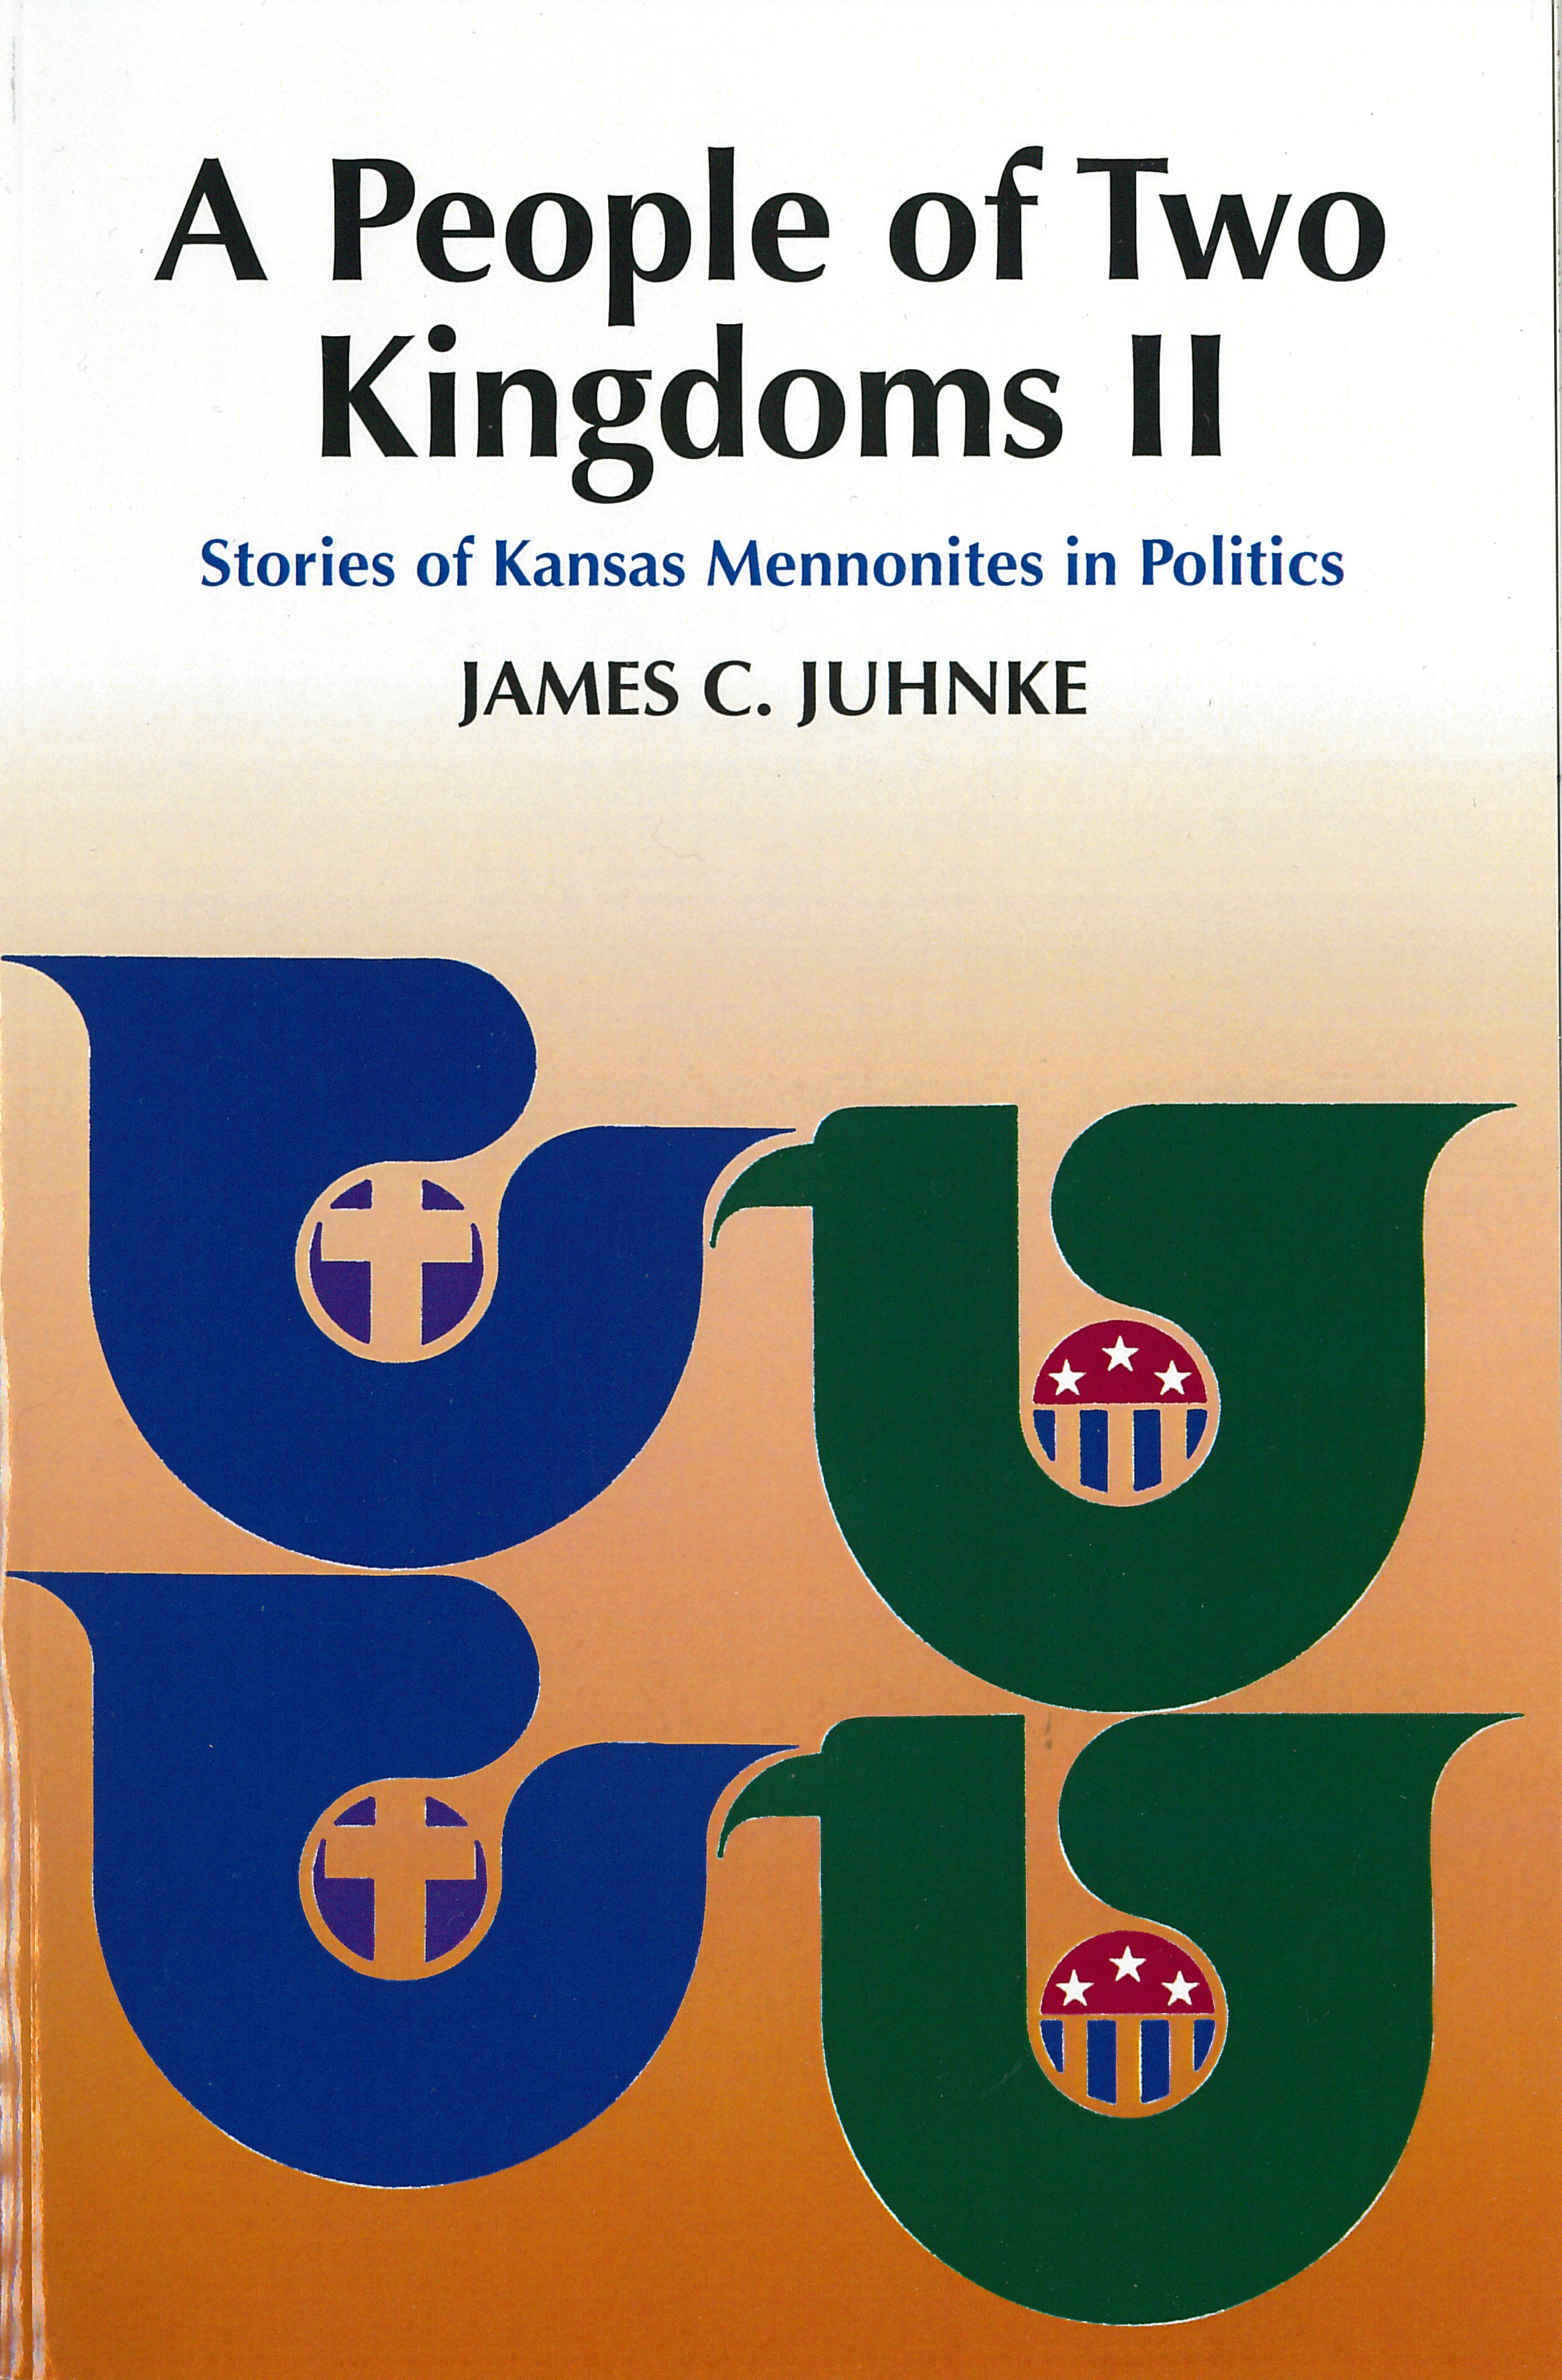 A People of Two Kingdoms II: Stories of Kansas Mennonites in Politics